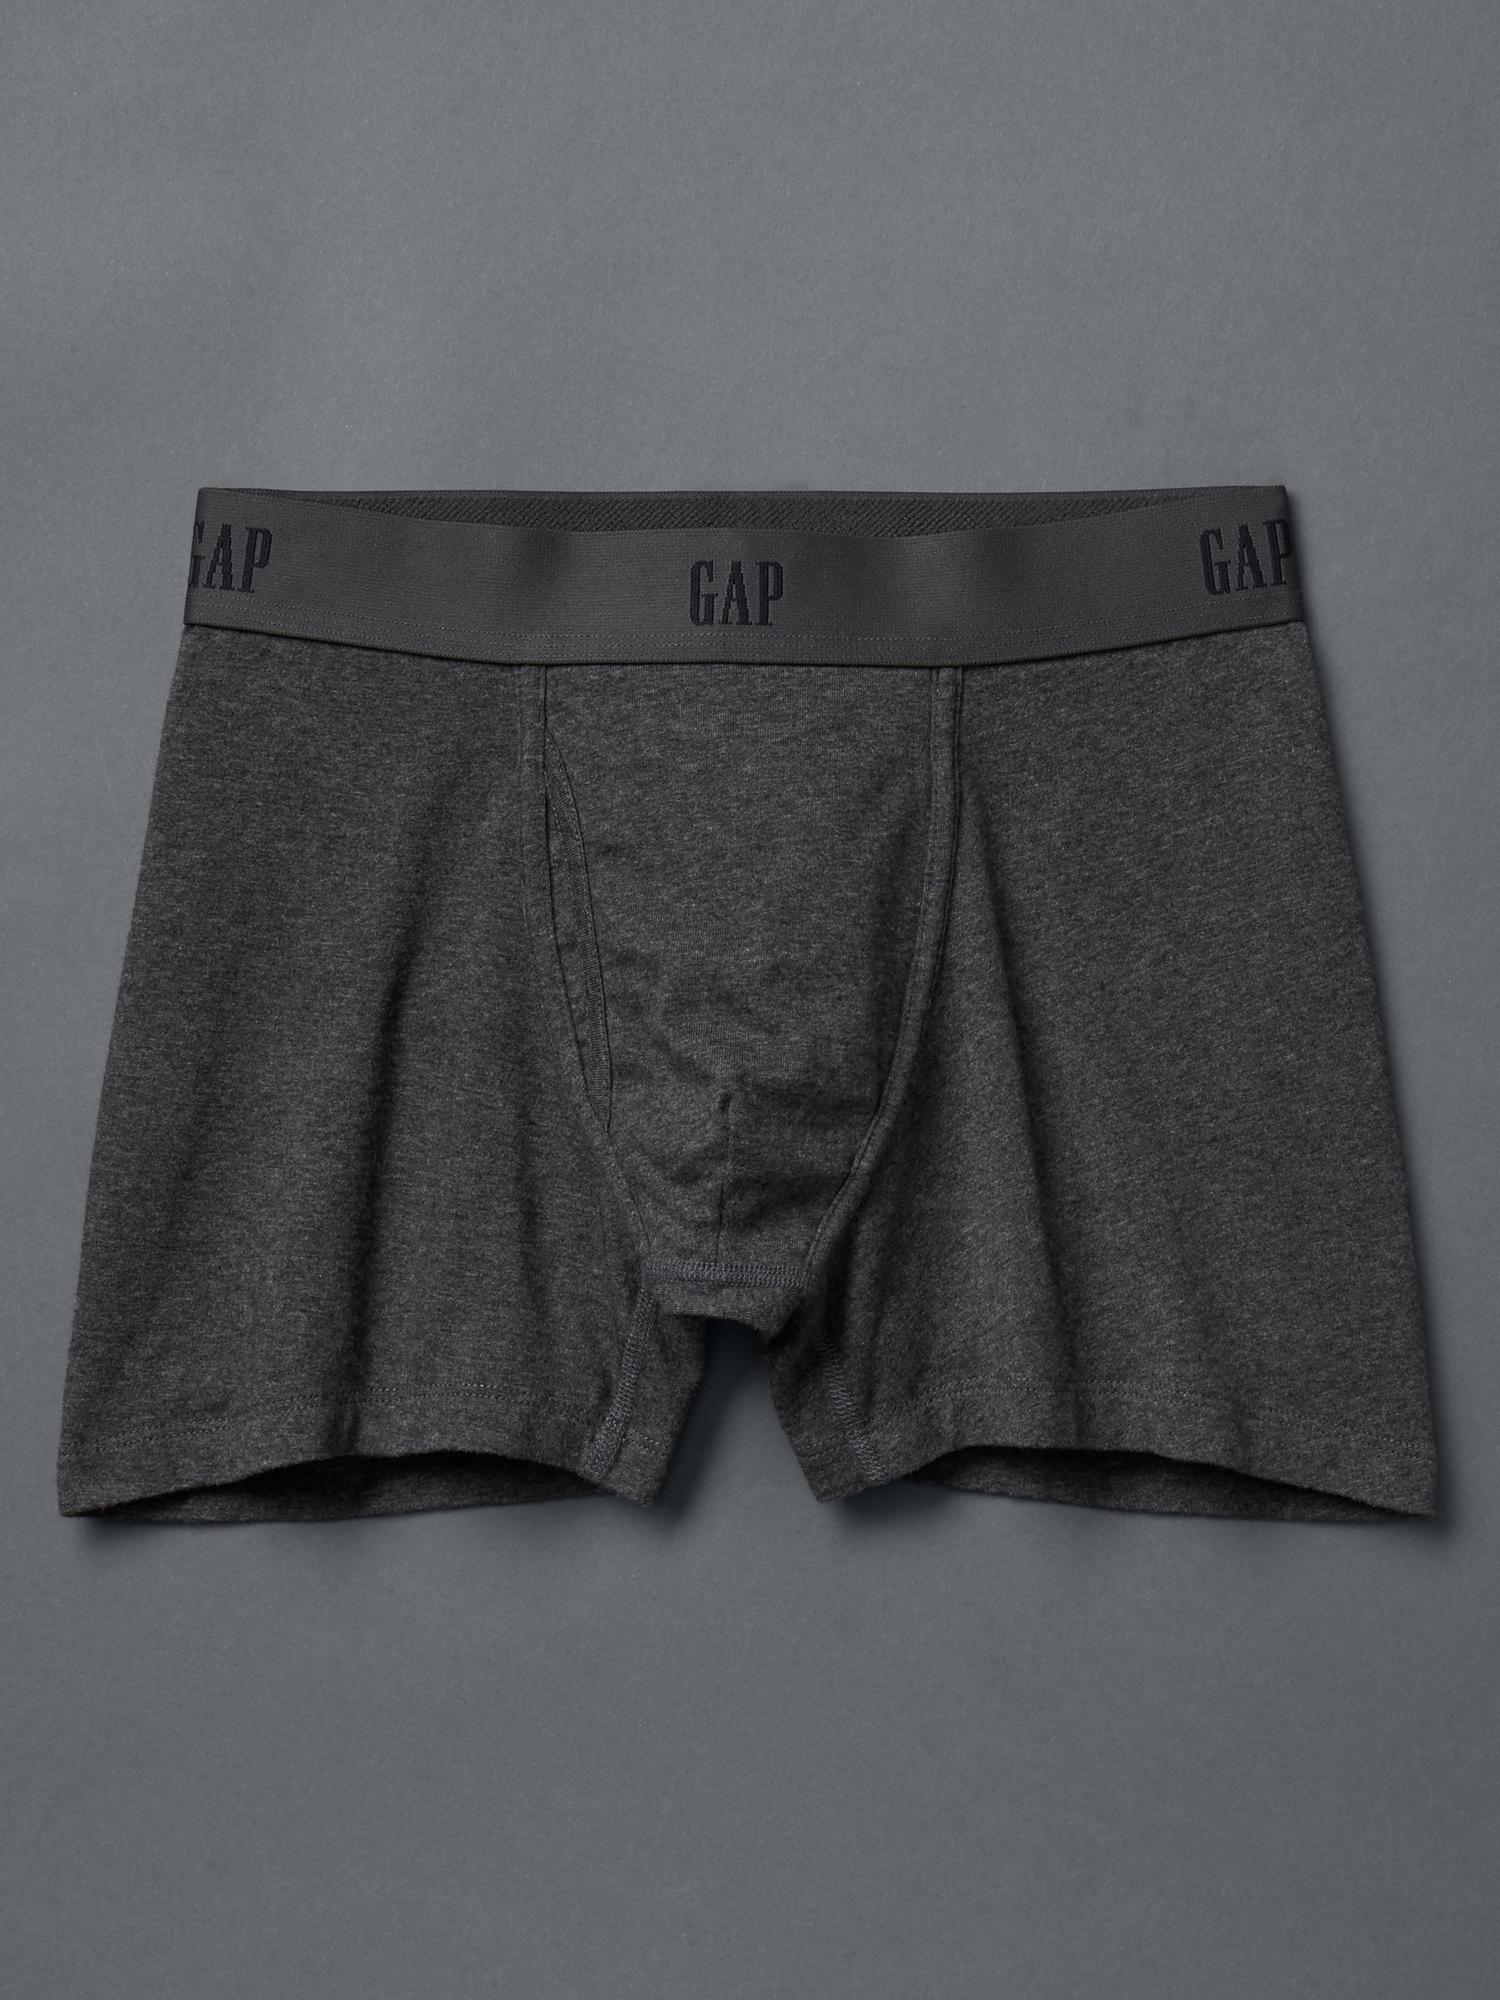 NEW Gap Cotton Blend Stretch Boxer Briefs 3-Pack Black Gray Camo Small